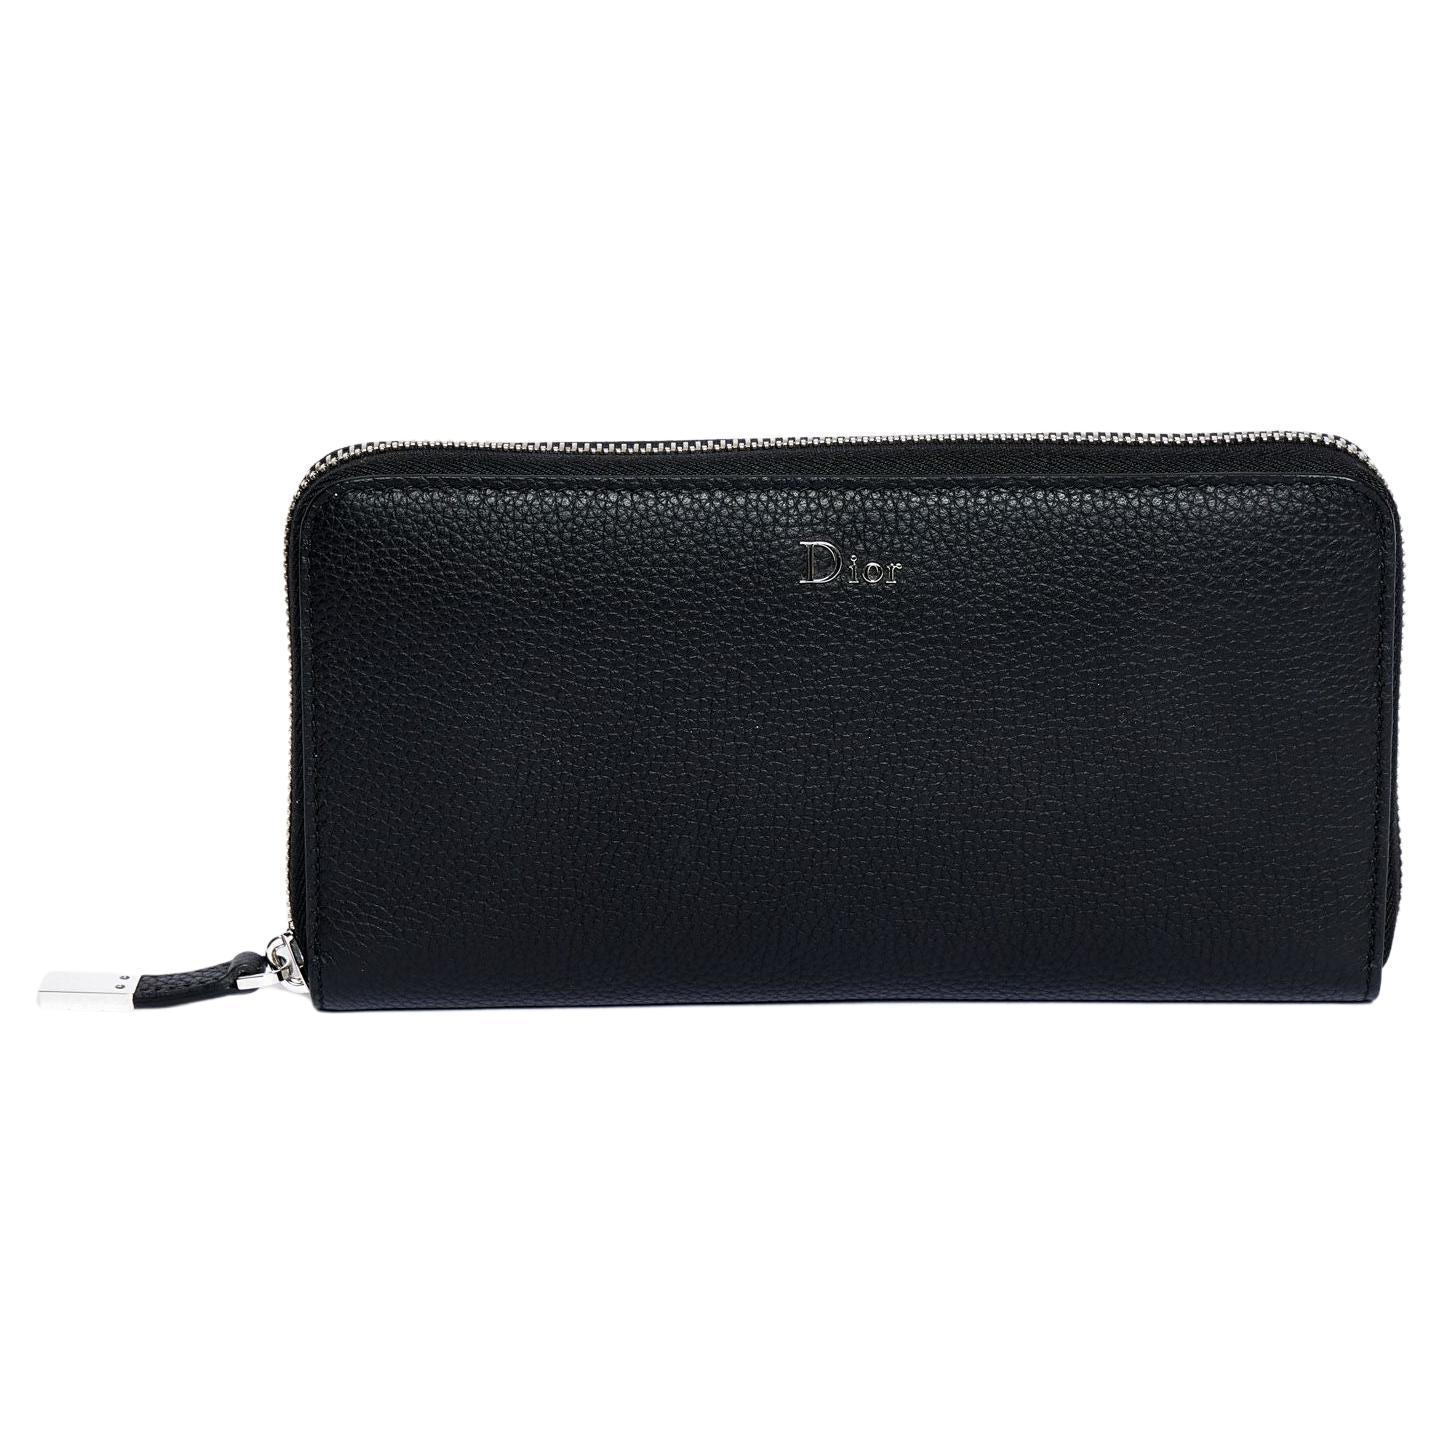 Dior New Black Leather Zip Around Wallet For Sale